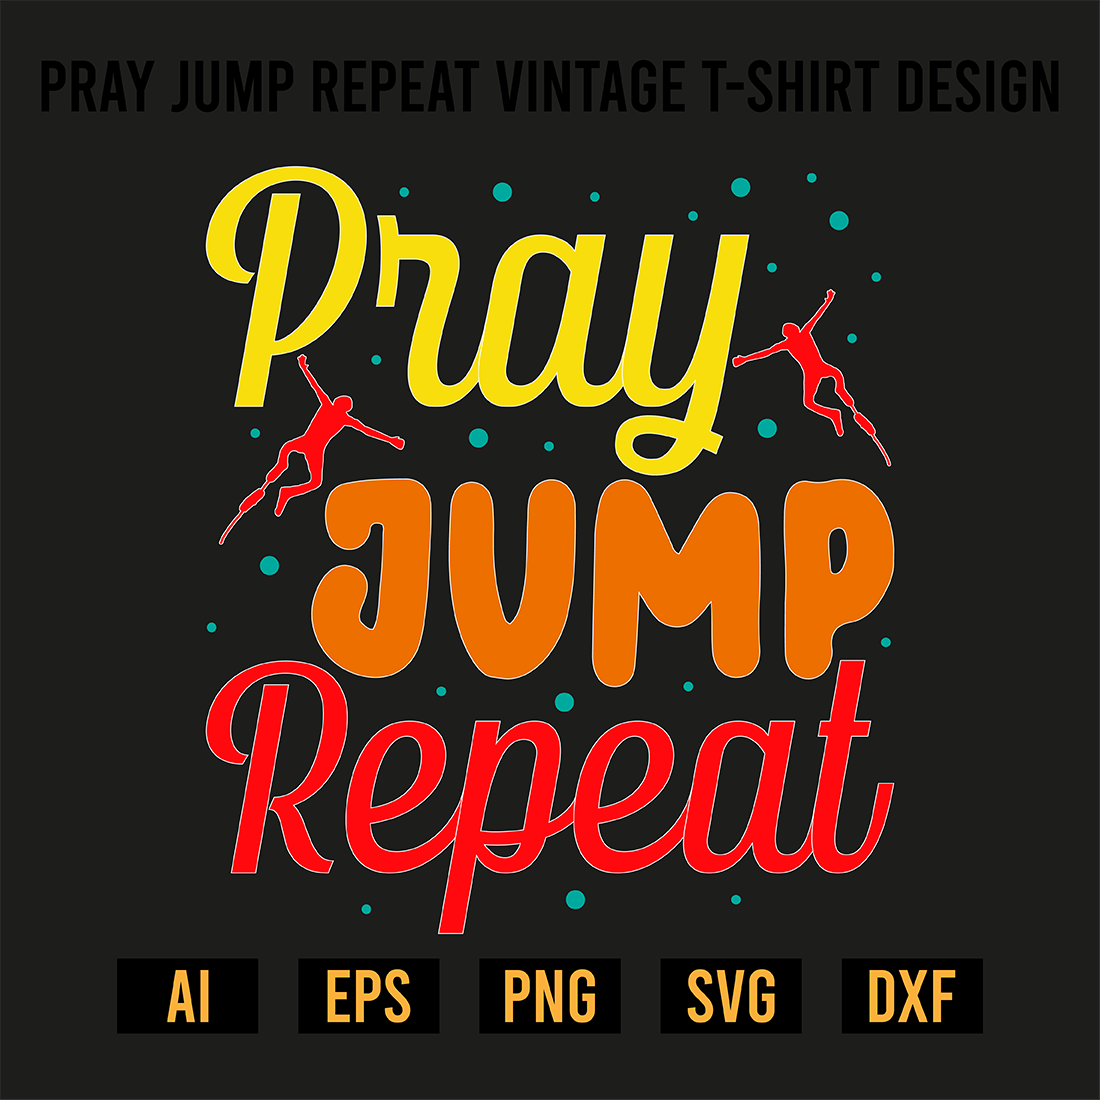 Pray Jump Repeat Vintage T-Shirt Design preview image.